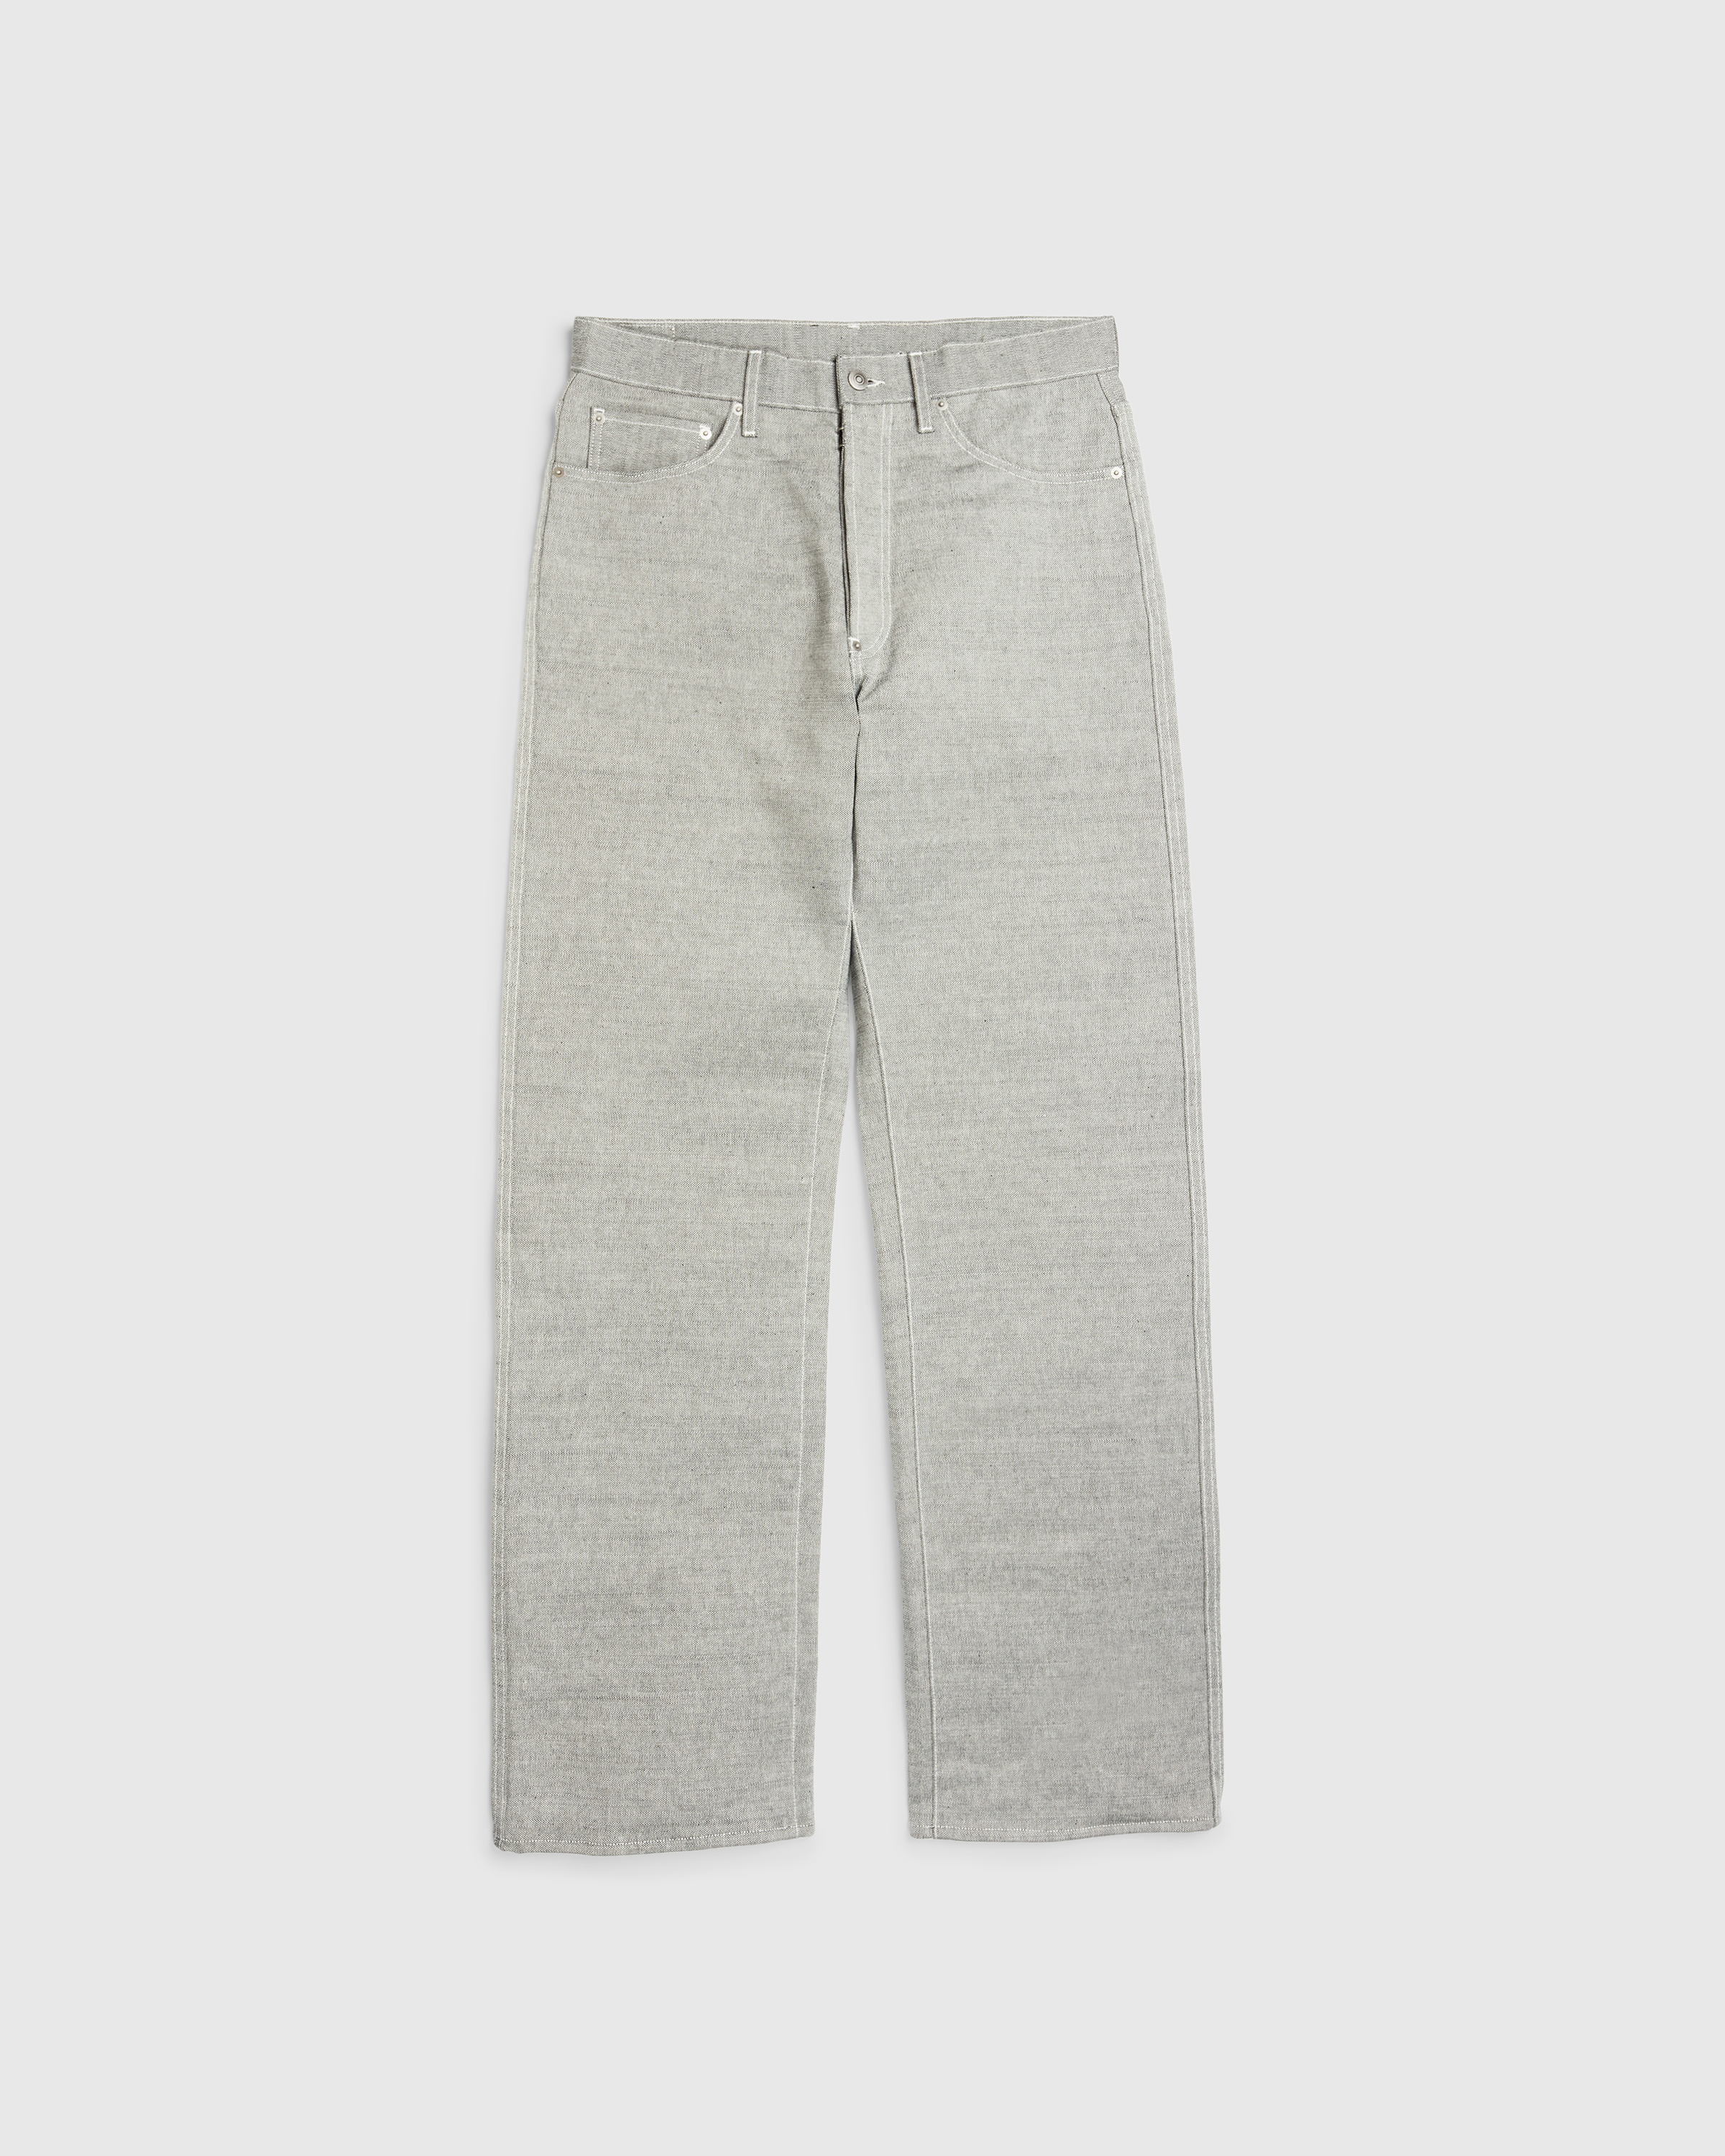 Maison Margiela – Five-Pocket Jeans Caviar - Pants - Grey - Image 1